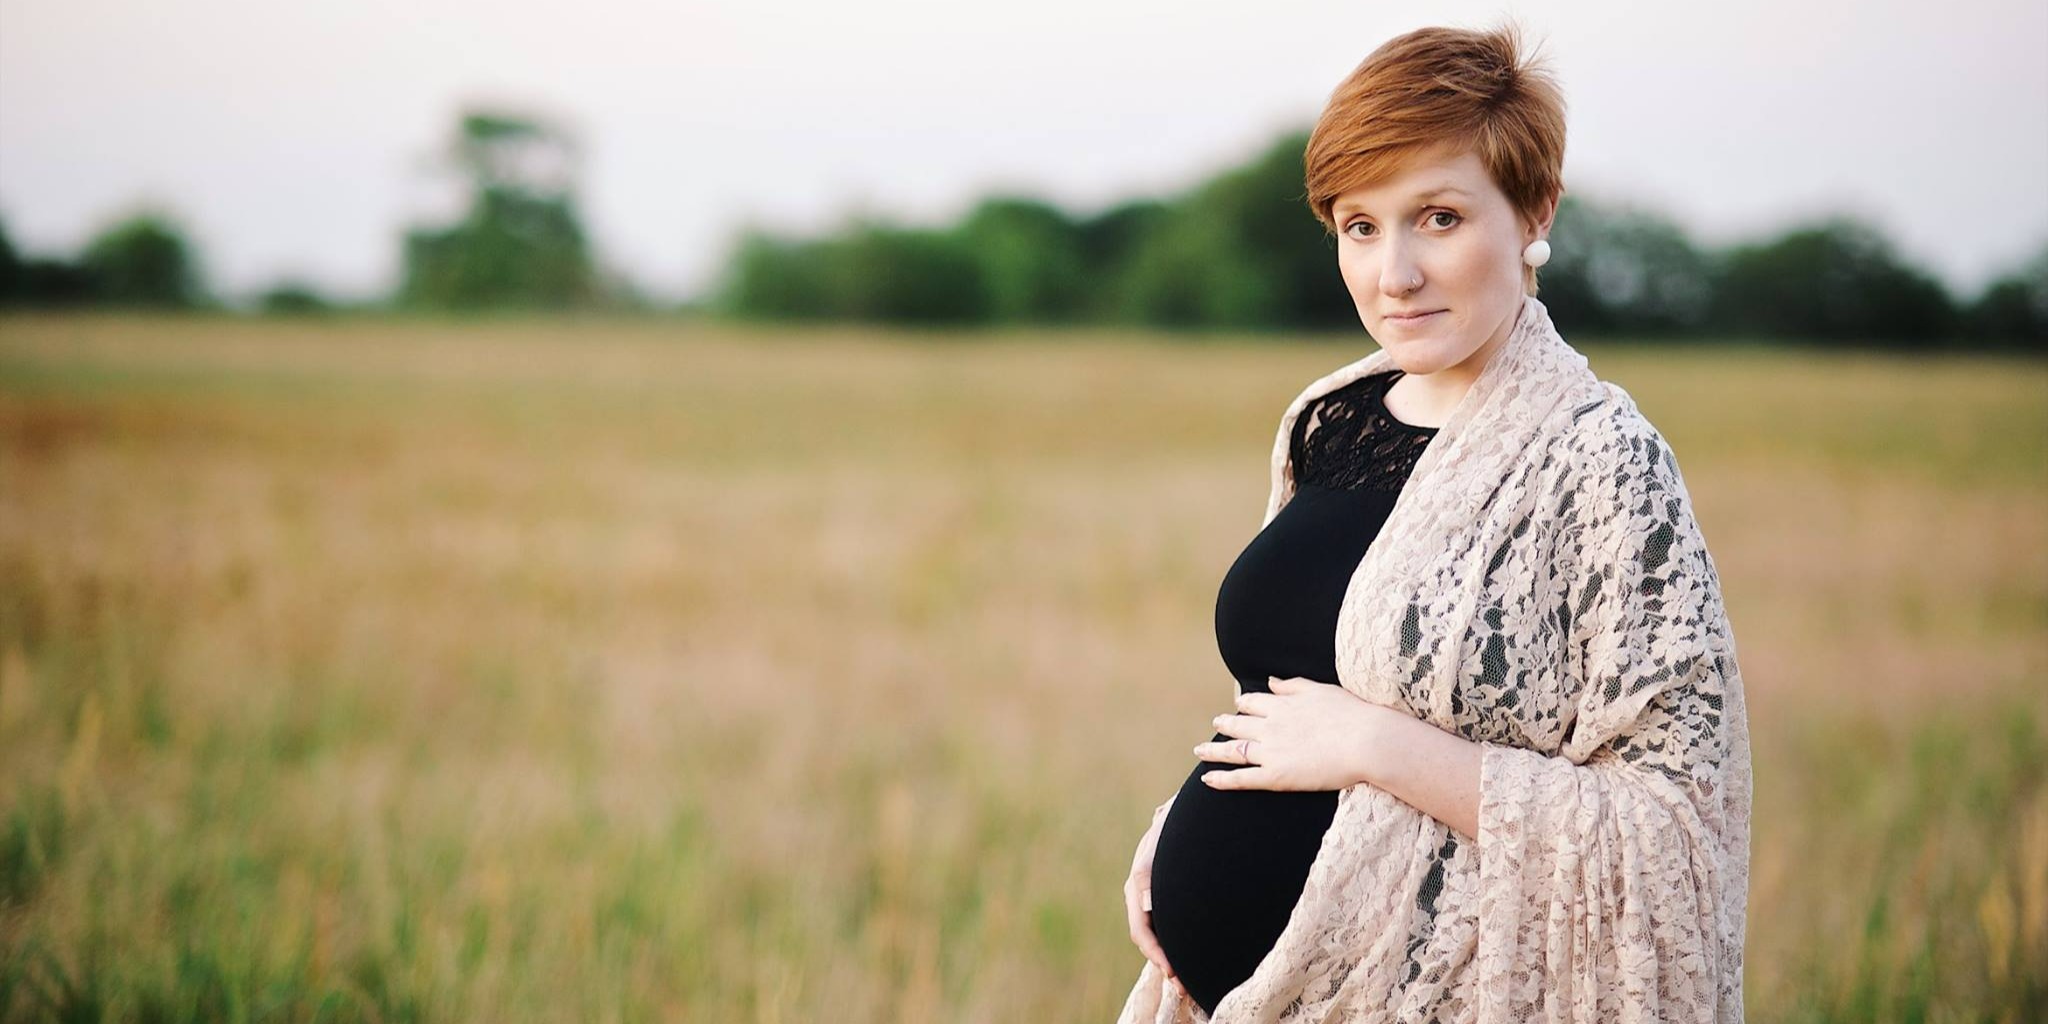 Autistic and Pregnant: Part 2